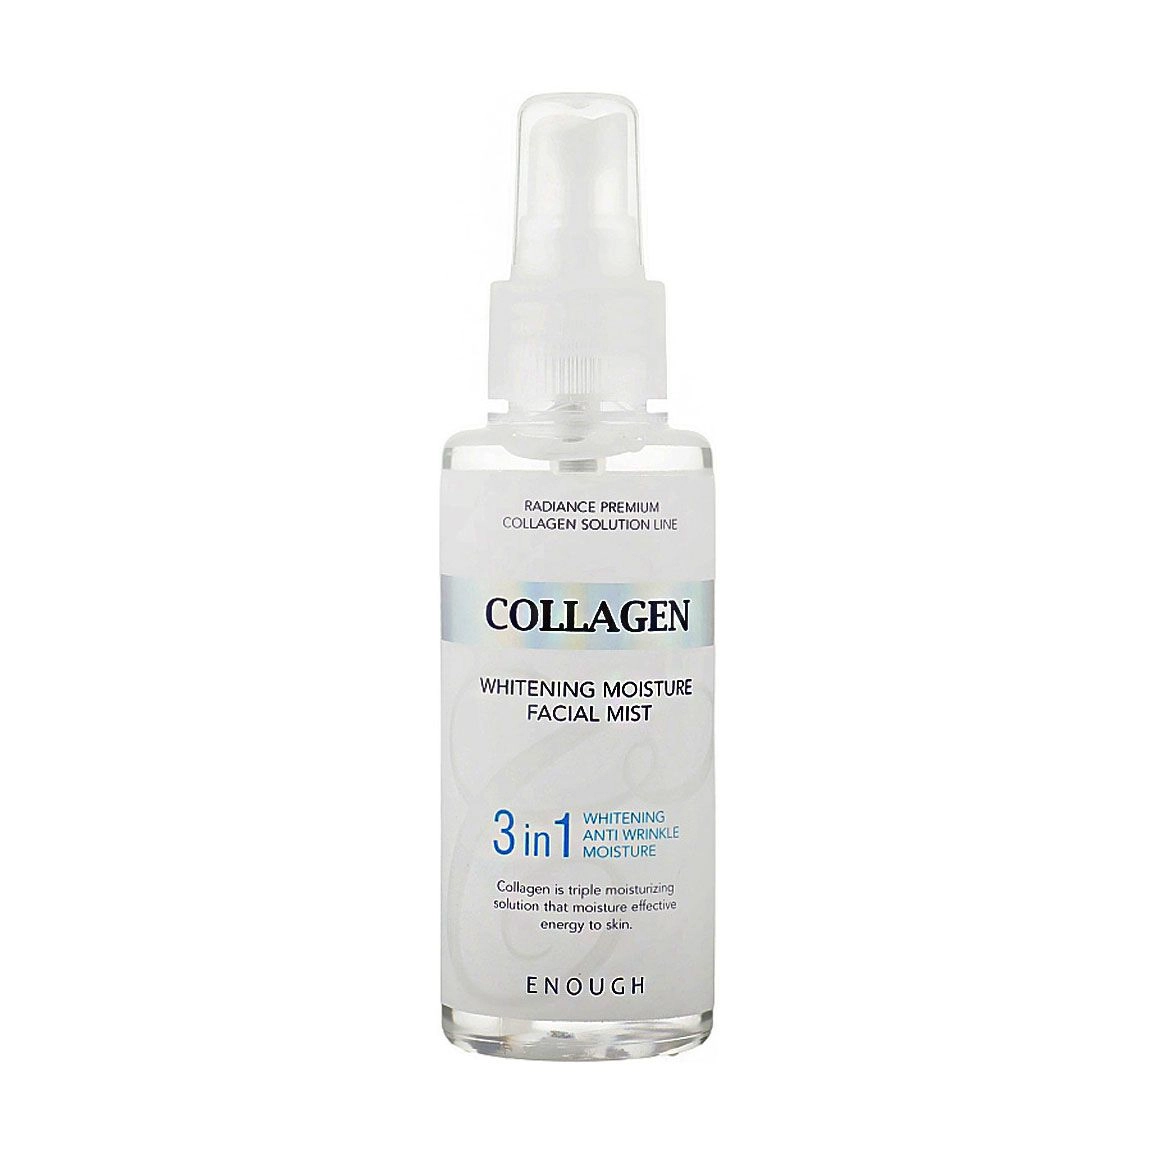 Відбілюючий міст для обличчя з колагеном - Enough Collagen Whitening Moisture Facial Mist 3 in 1, 100 мл - фото N3